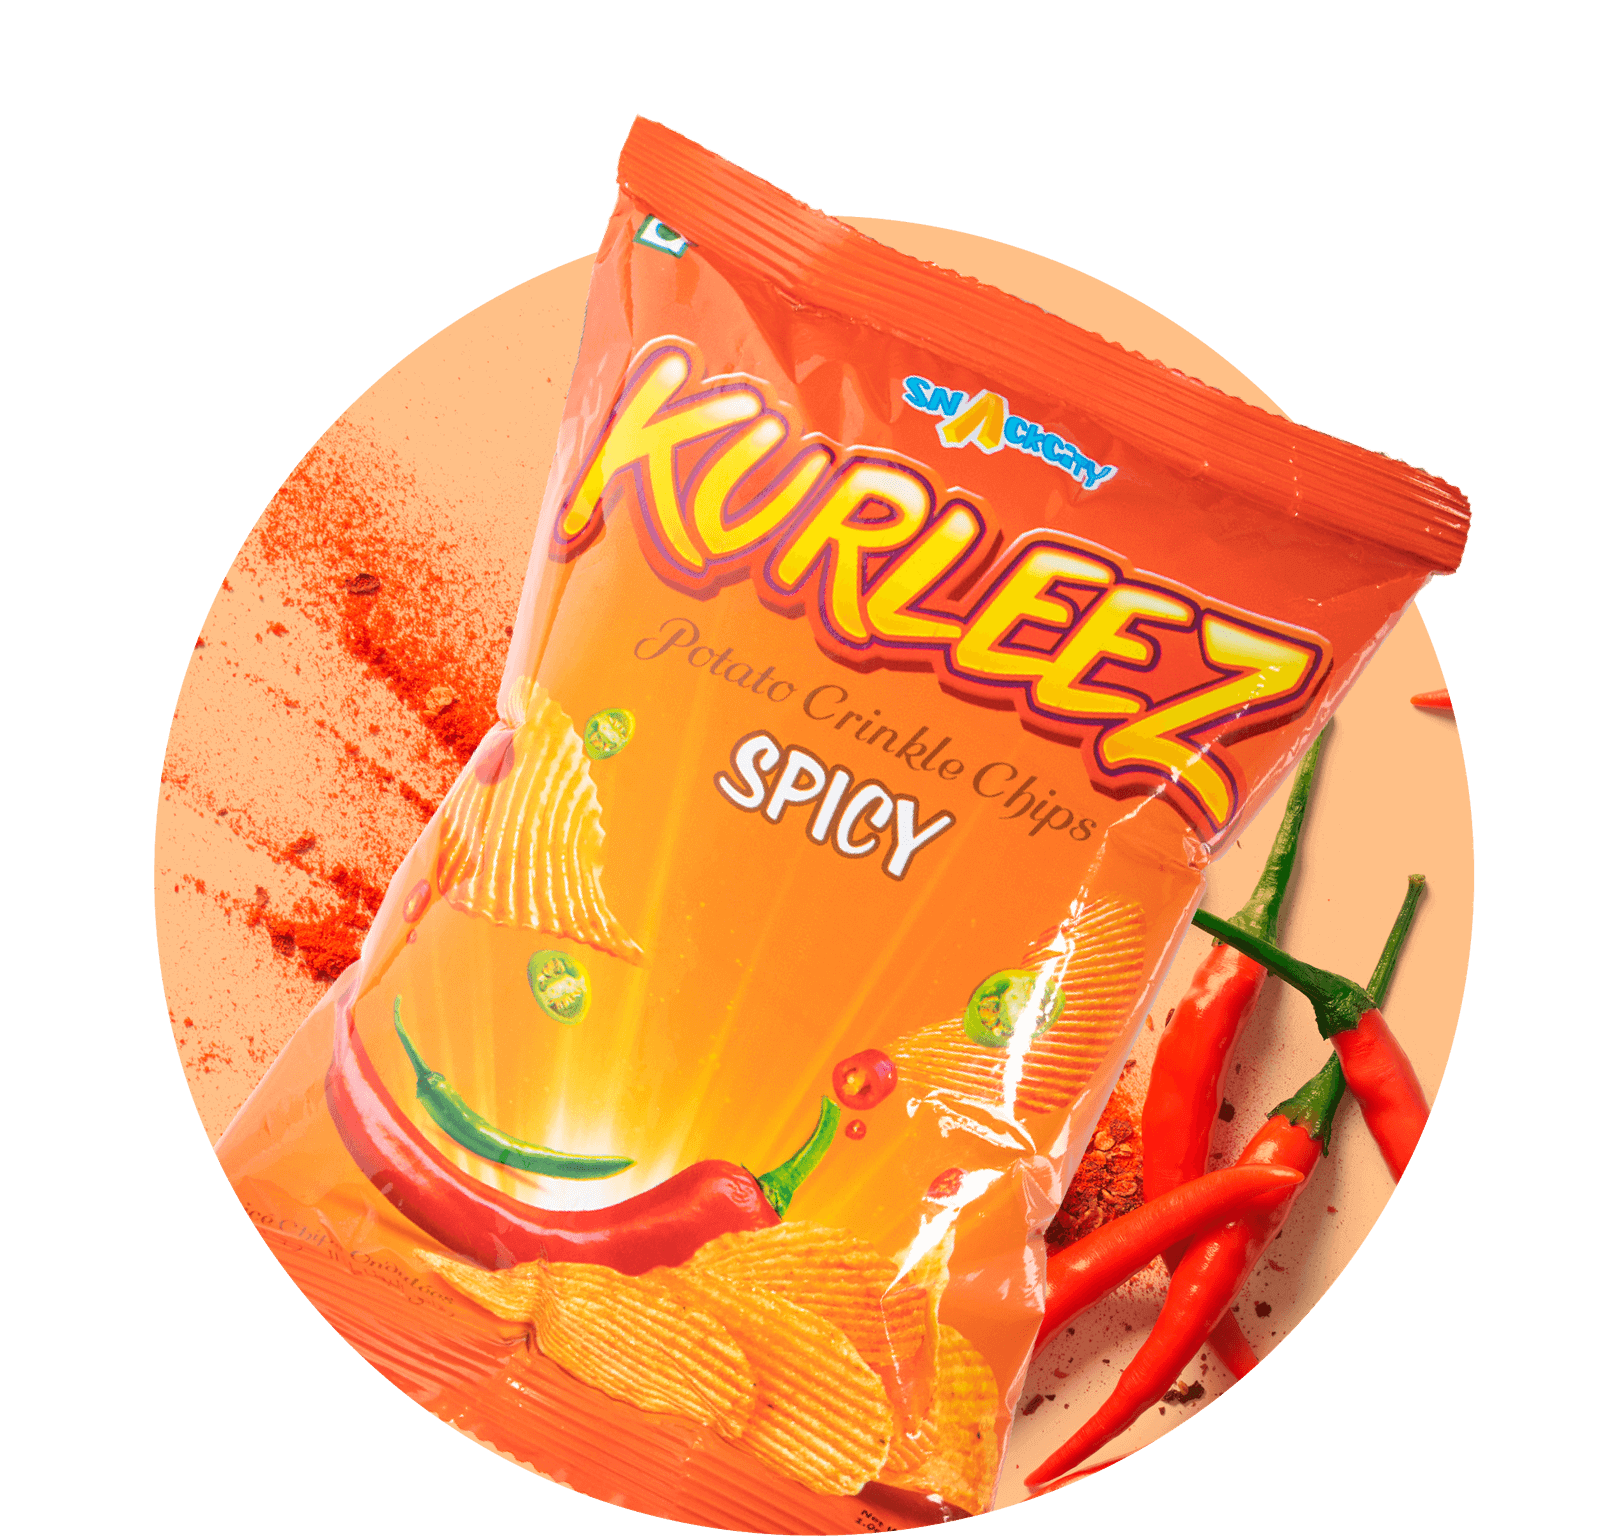 Image for Kurleez Spicy 